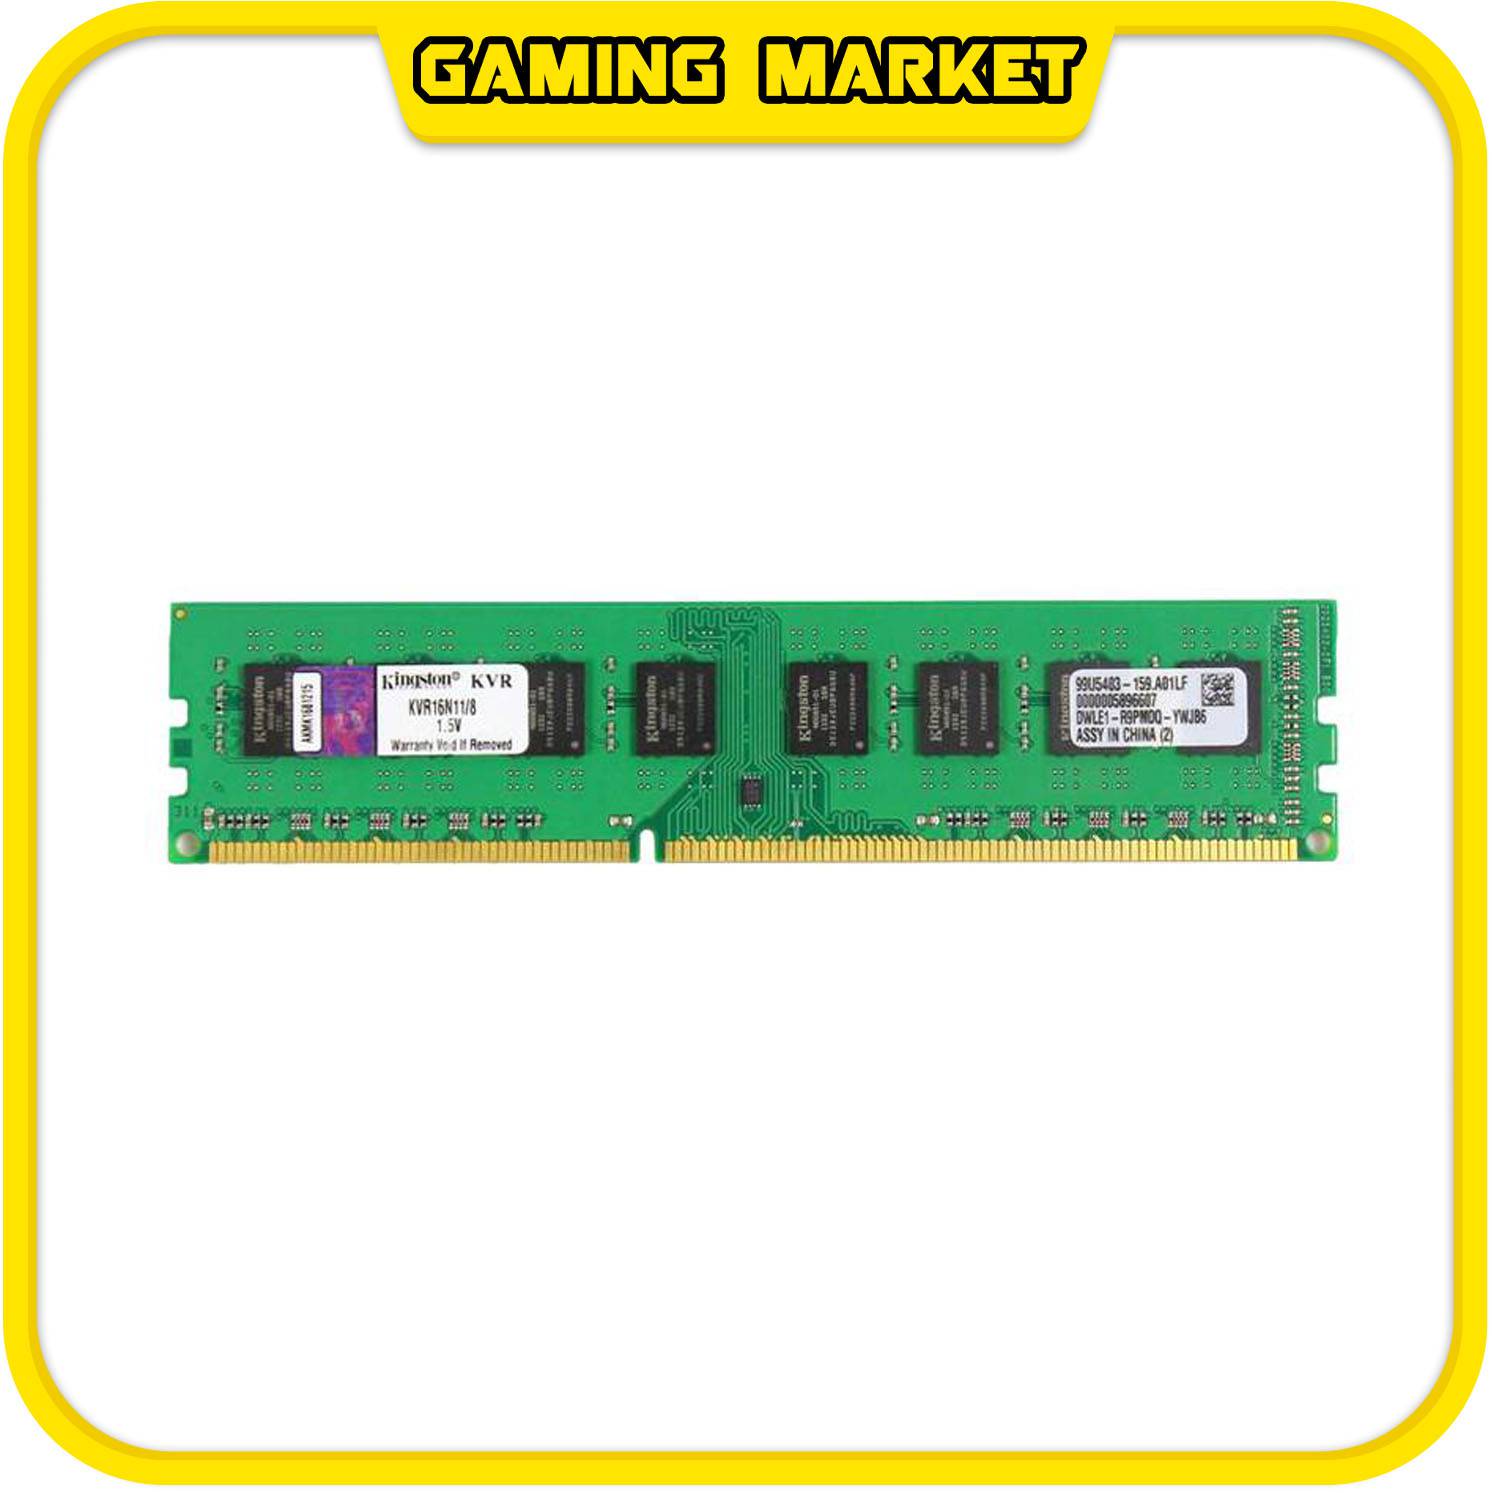 RAM KINGSTON 8GB DDR3-1600